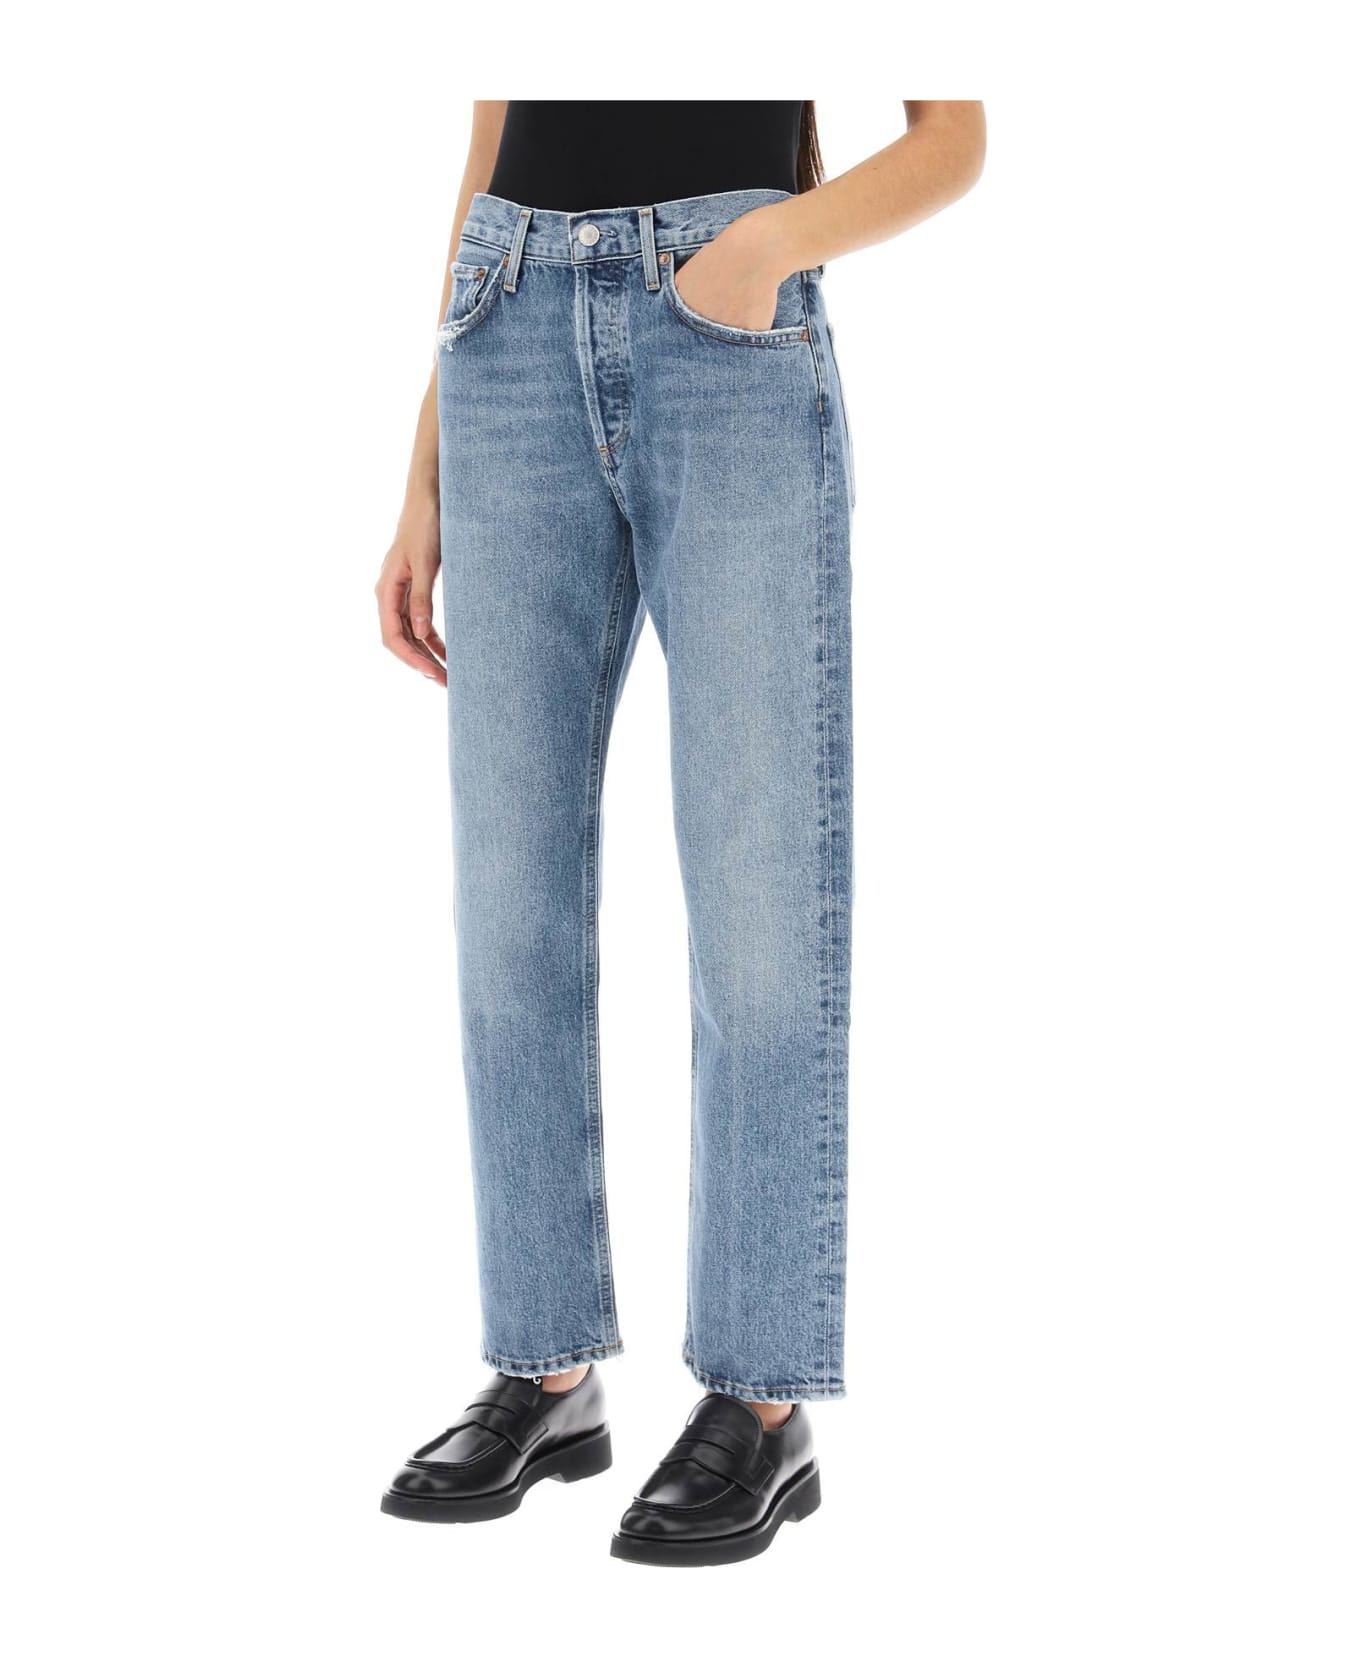 AGOLDE Parker Cropped Jeans - INVENTION (Light blue)